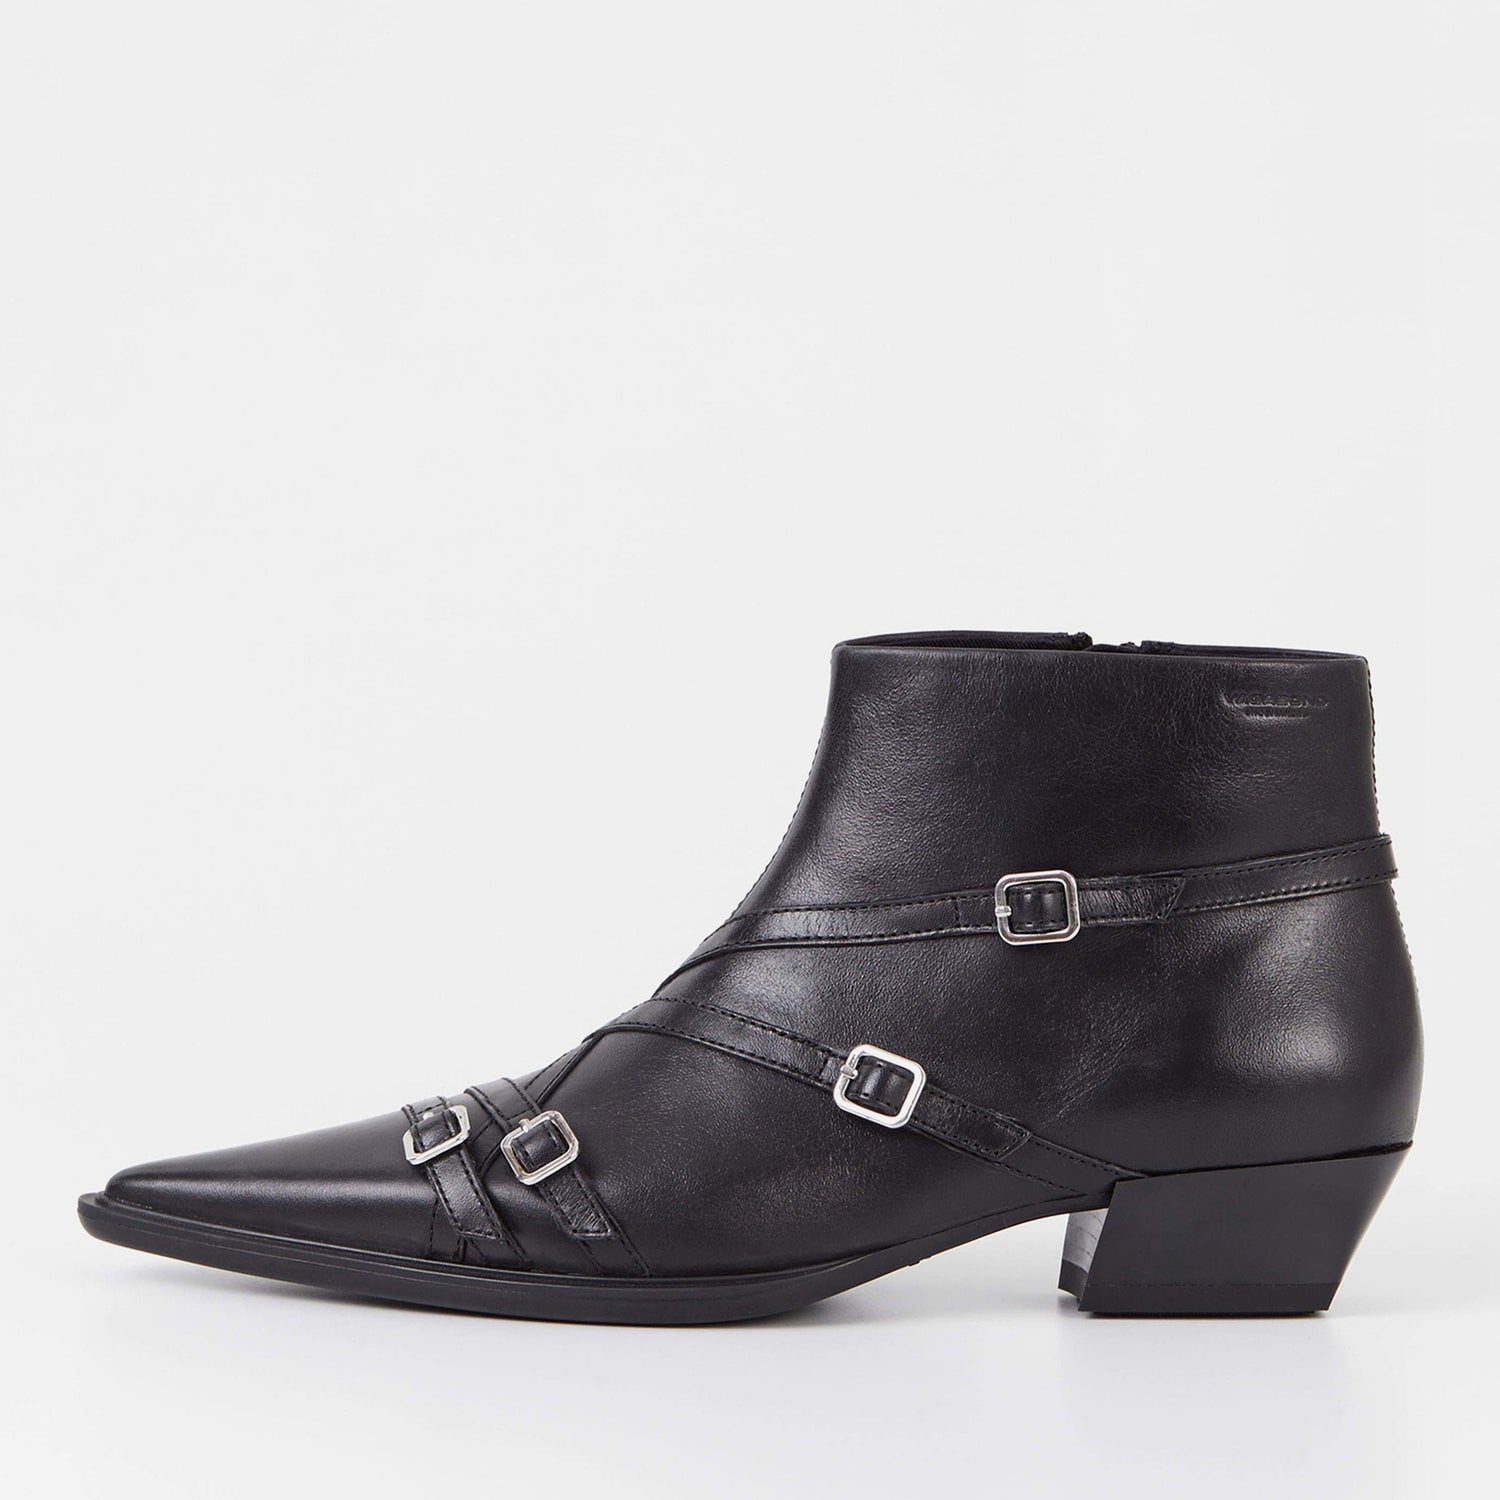 Vagabond Women's Cassie Leather Ankle Boots - UK 8